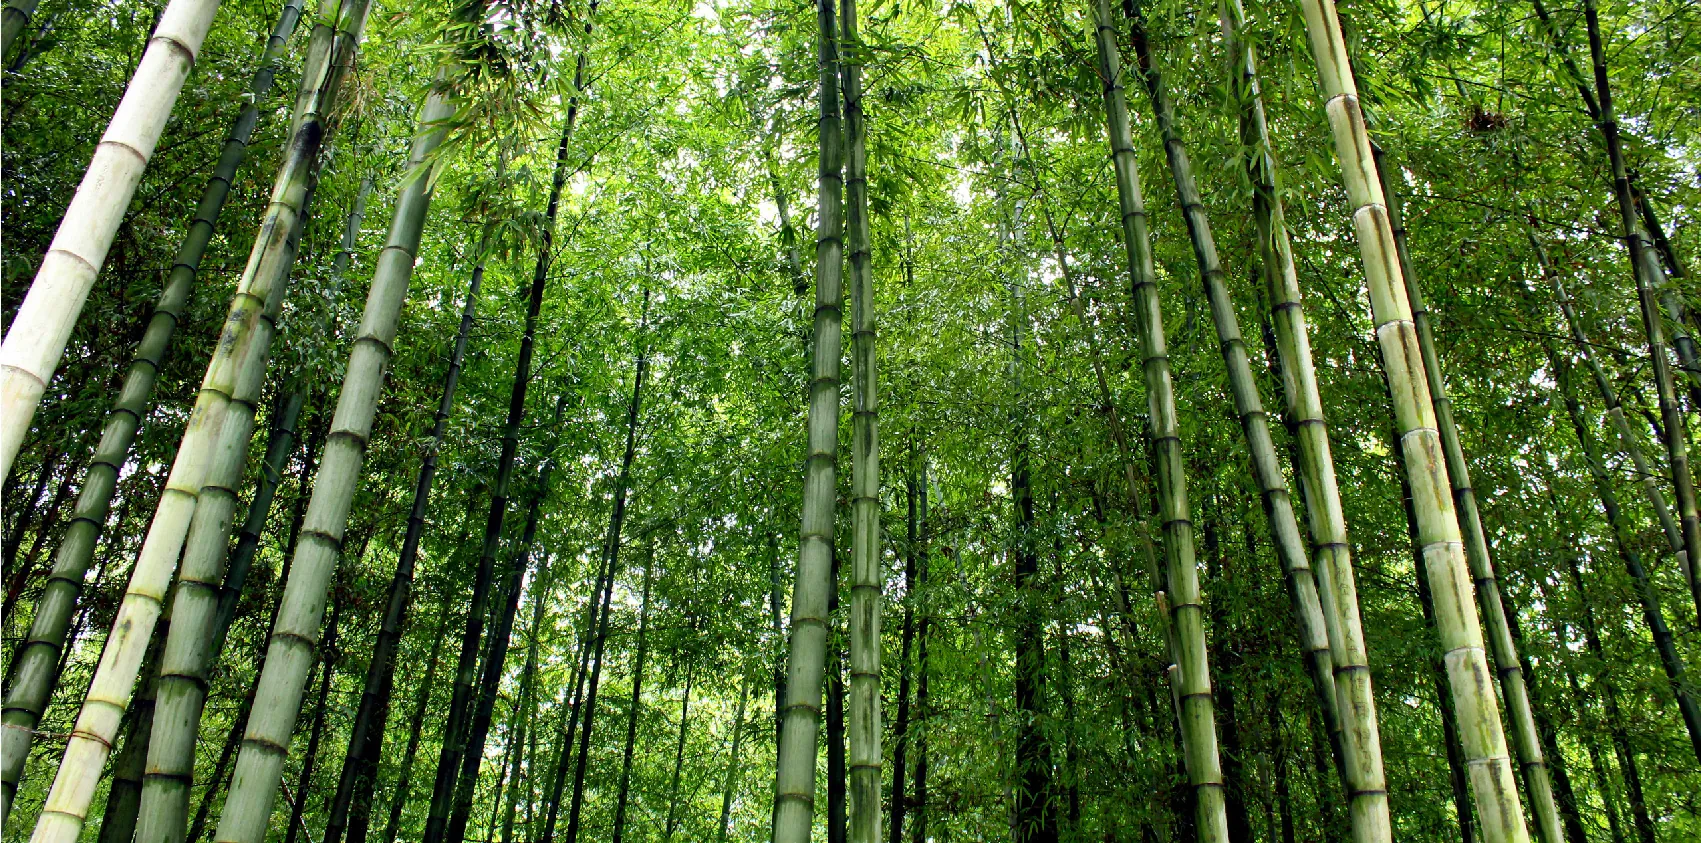 An upward view of bamboo trees 